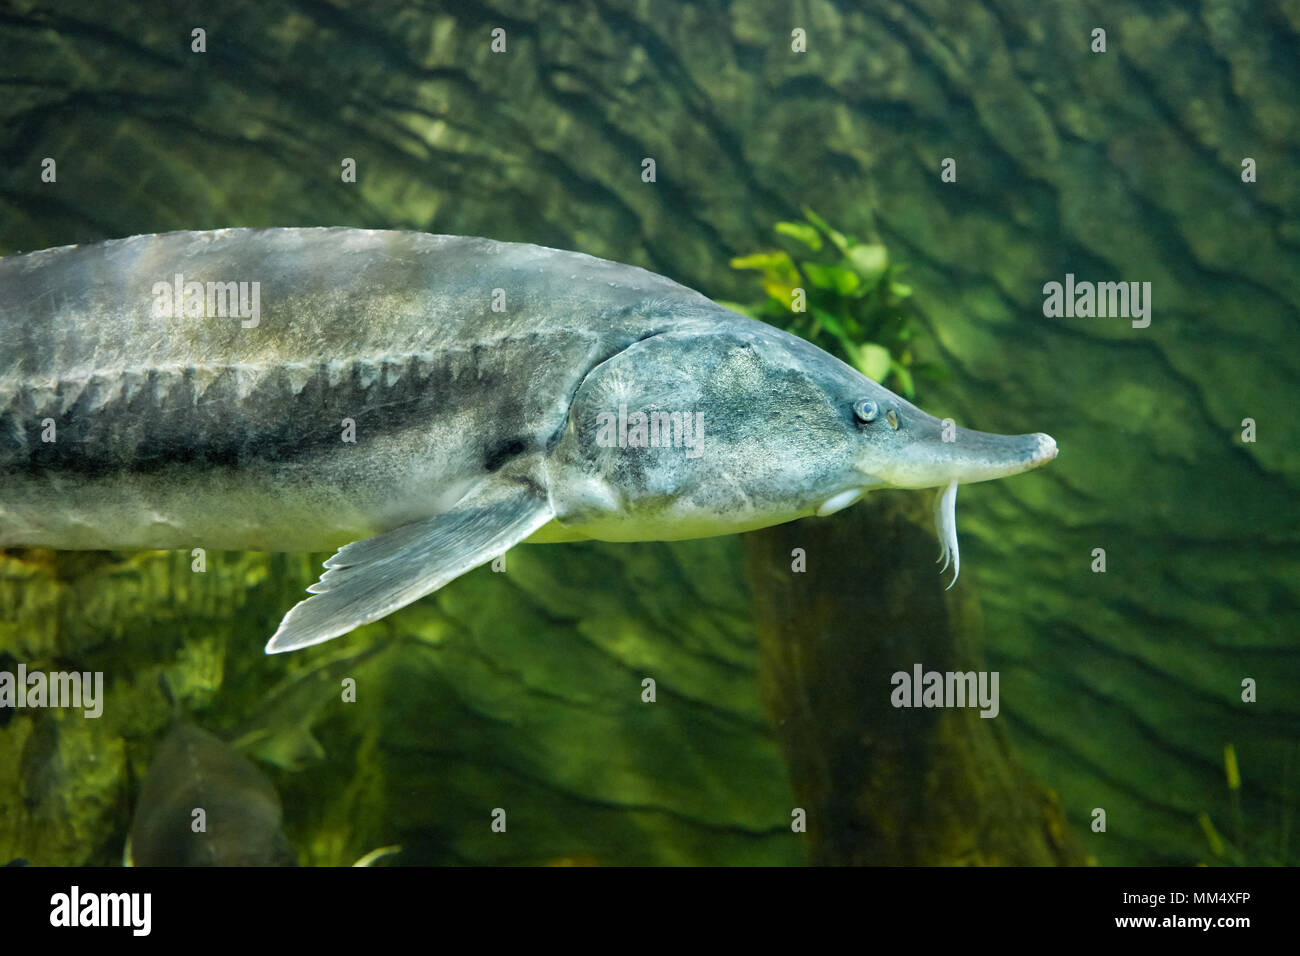 Beluga, or Great sturgeon. Scientific name: Huso huso. Vinpearl Land Aquarium, Phu Quoc, Vietnam. Stock Photo